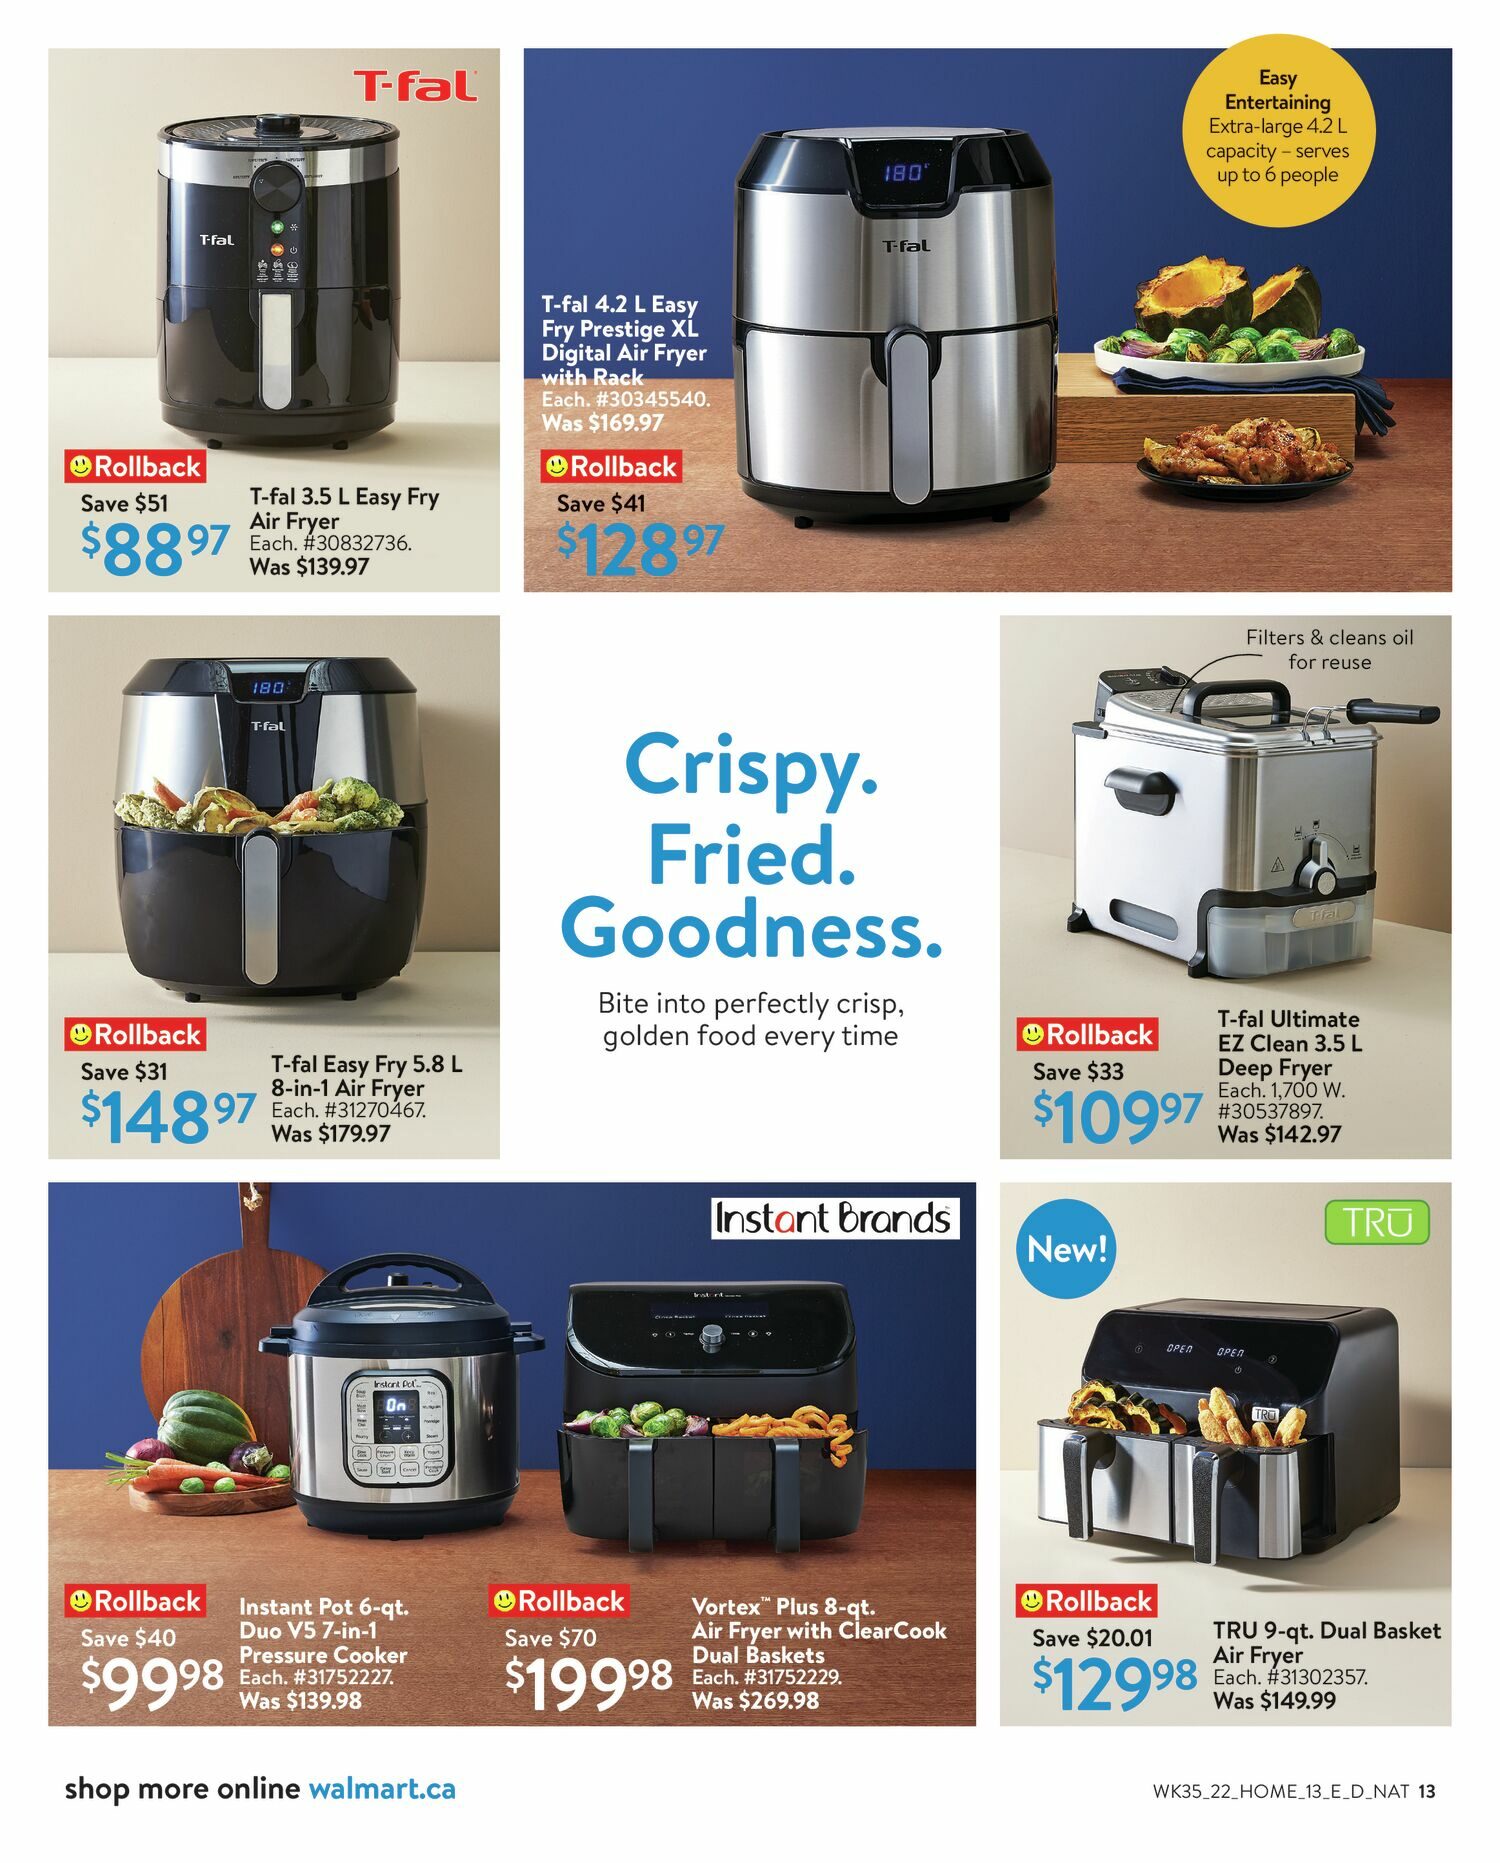 Walmart] Toastmaster 2.5L Air Fryer - $39 - RedFlagDeals.com Forums